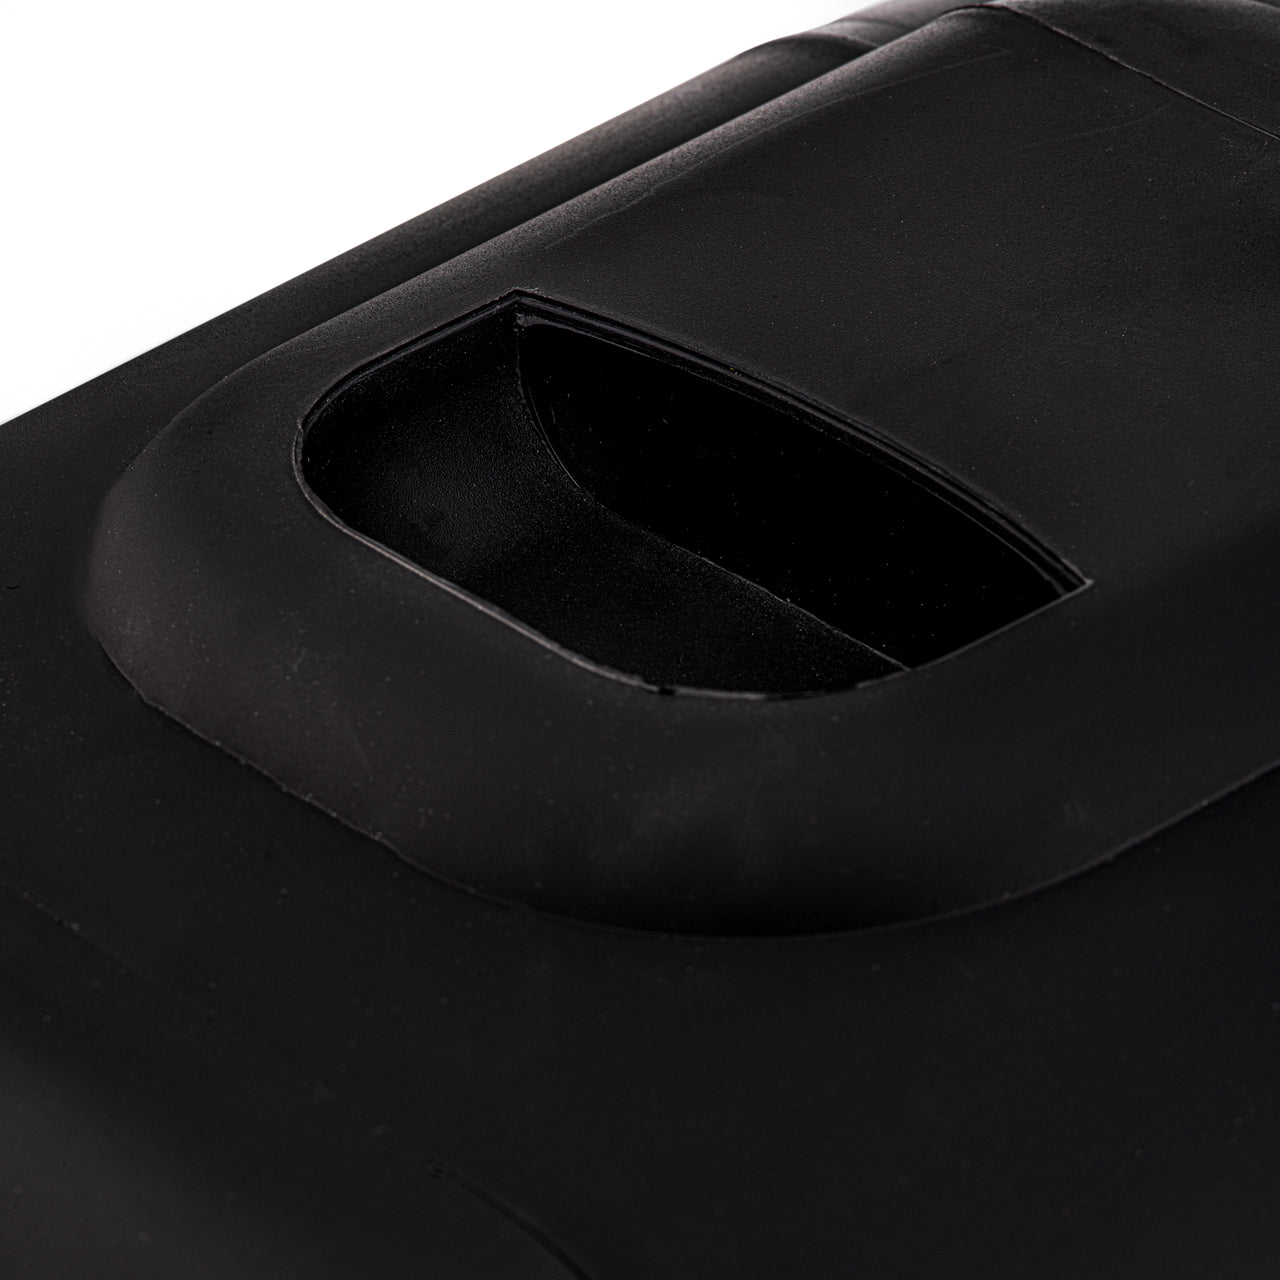 Subcold Classic 4L Mini Fridge - Black | Refurbished